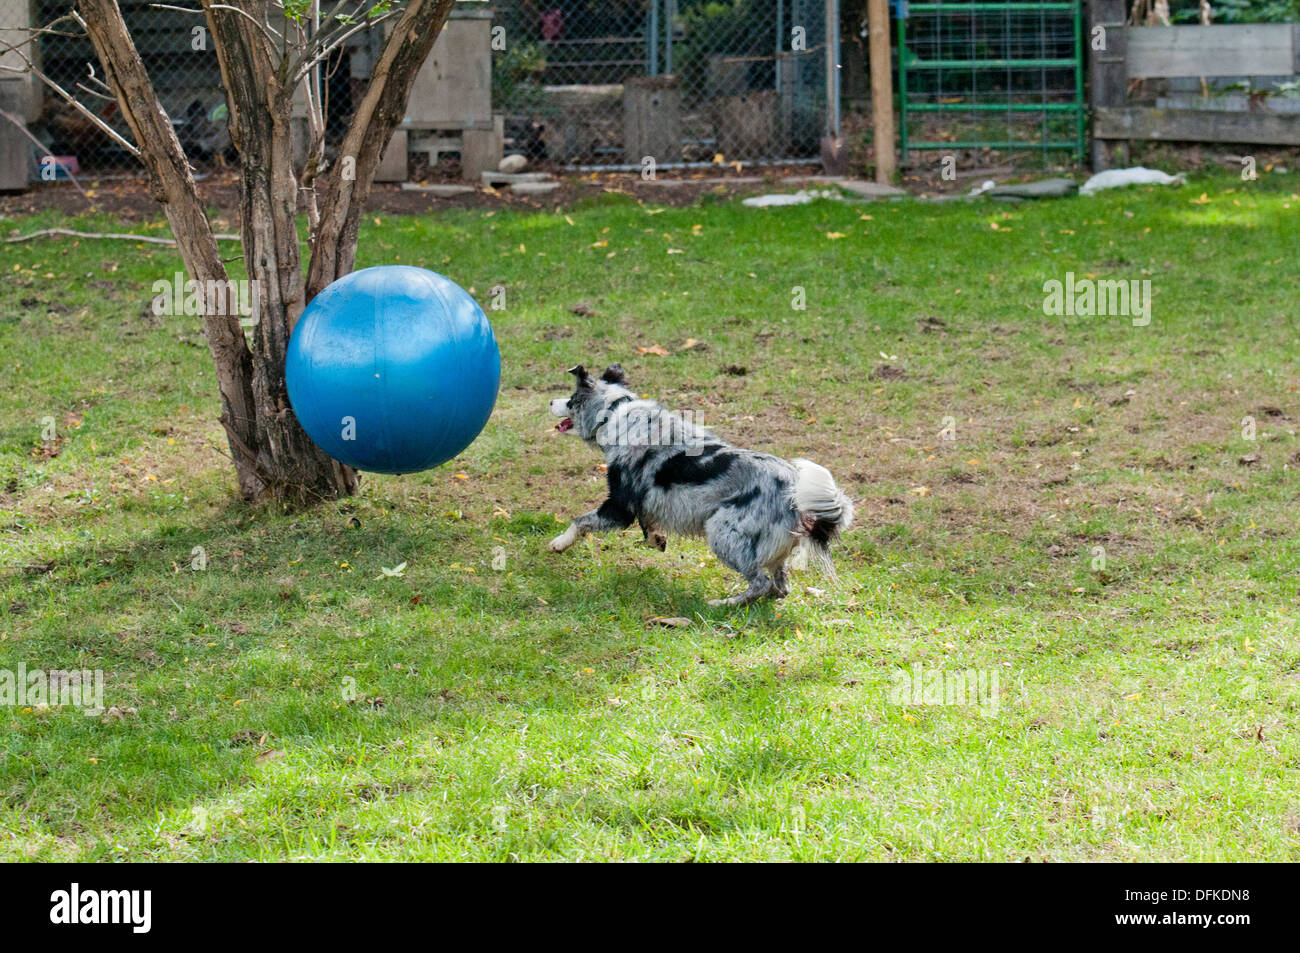 Border collie 'herding' (chasing) large exercise ball Stock Photo